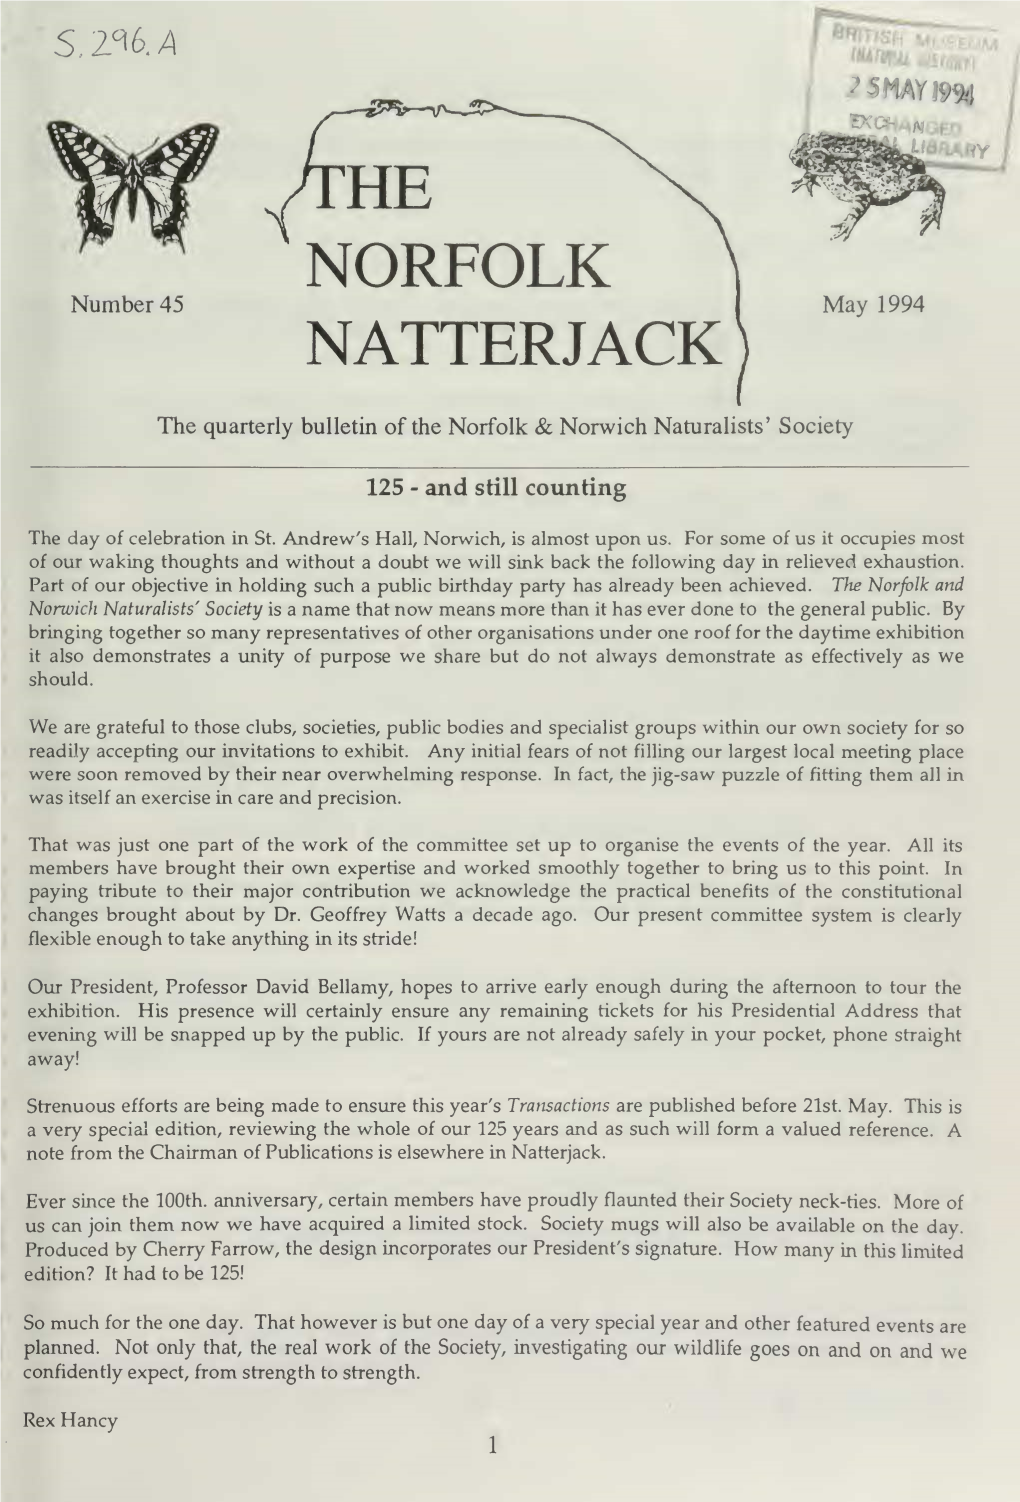 The Norfolk Natterjack of the NNNS